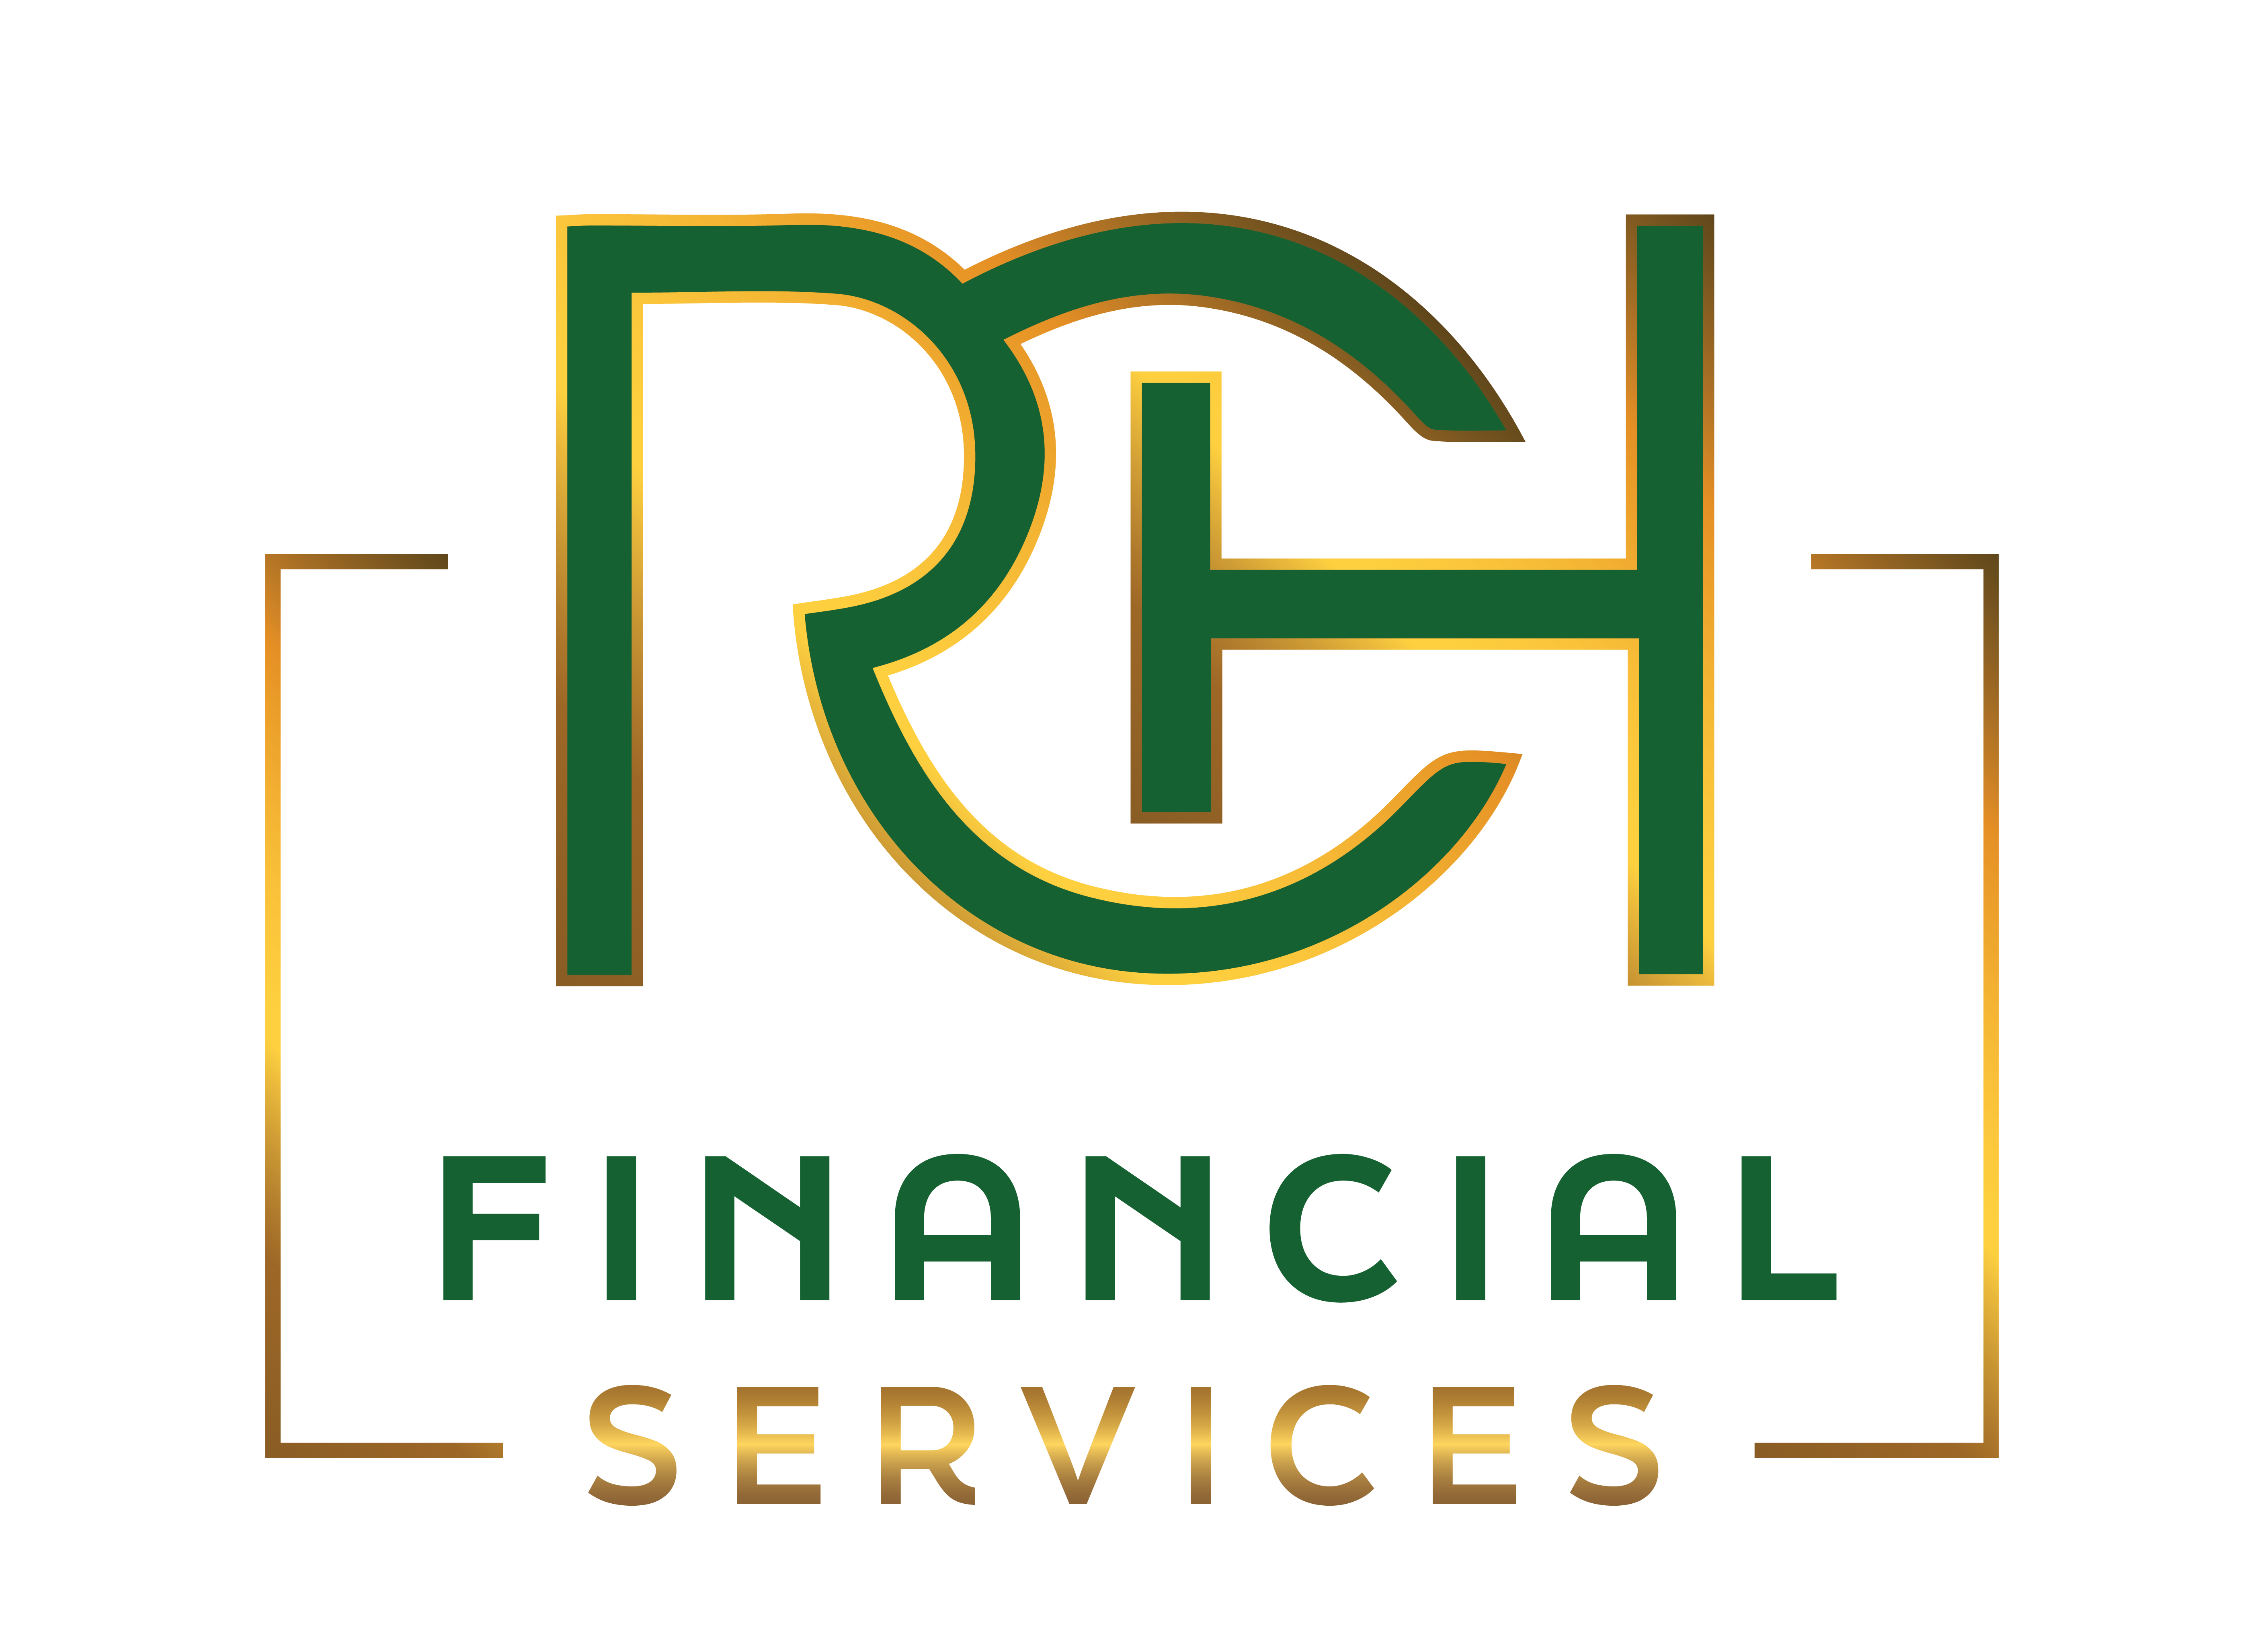 RCH FINANCIAL SERVICES